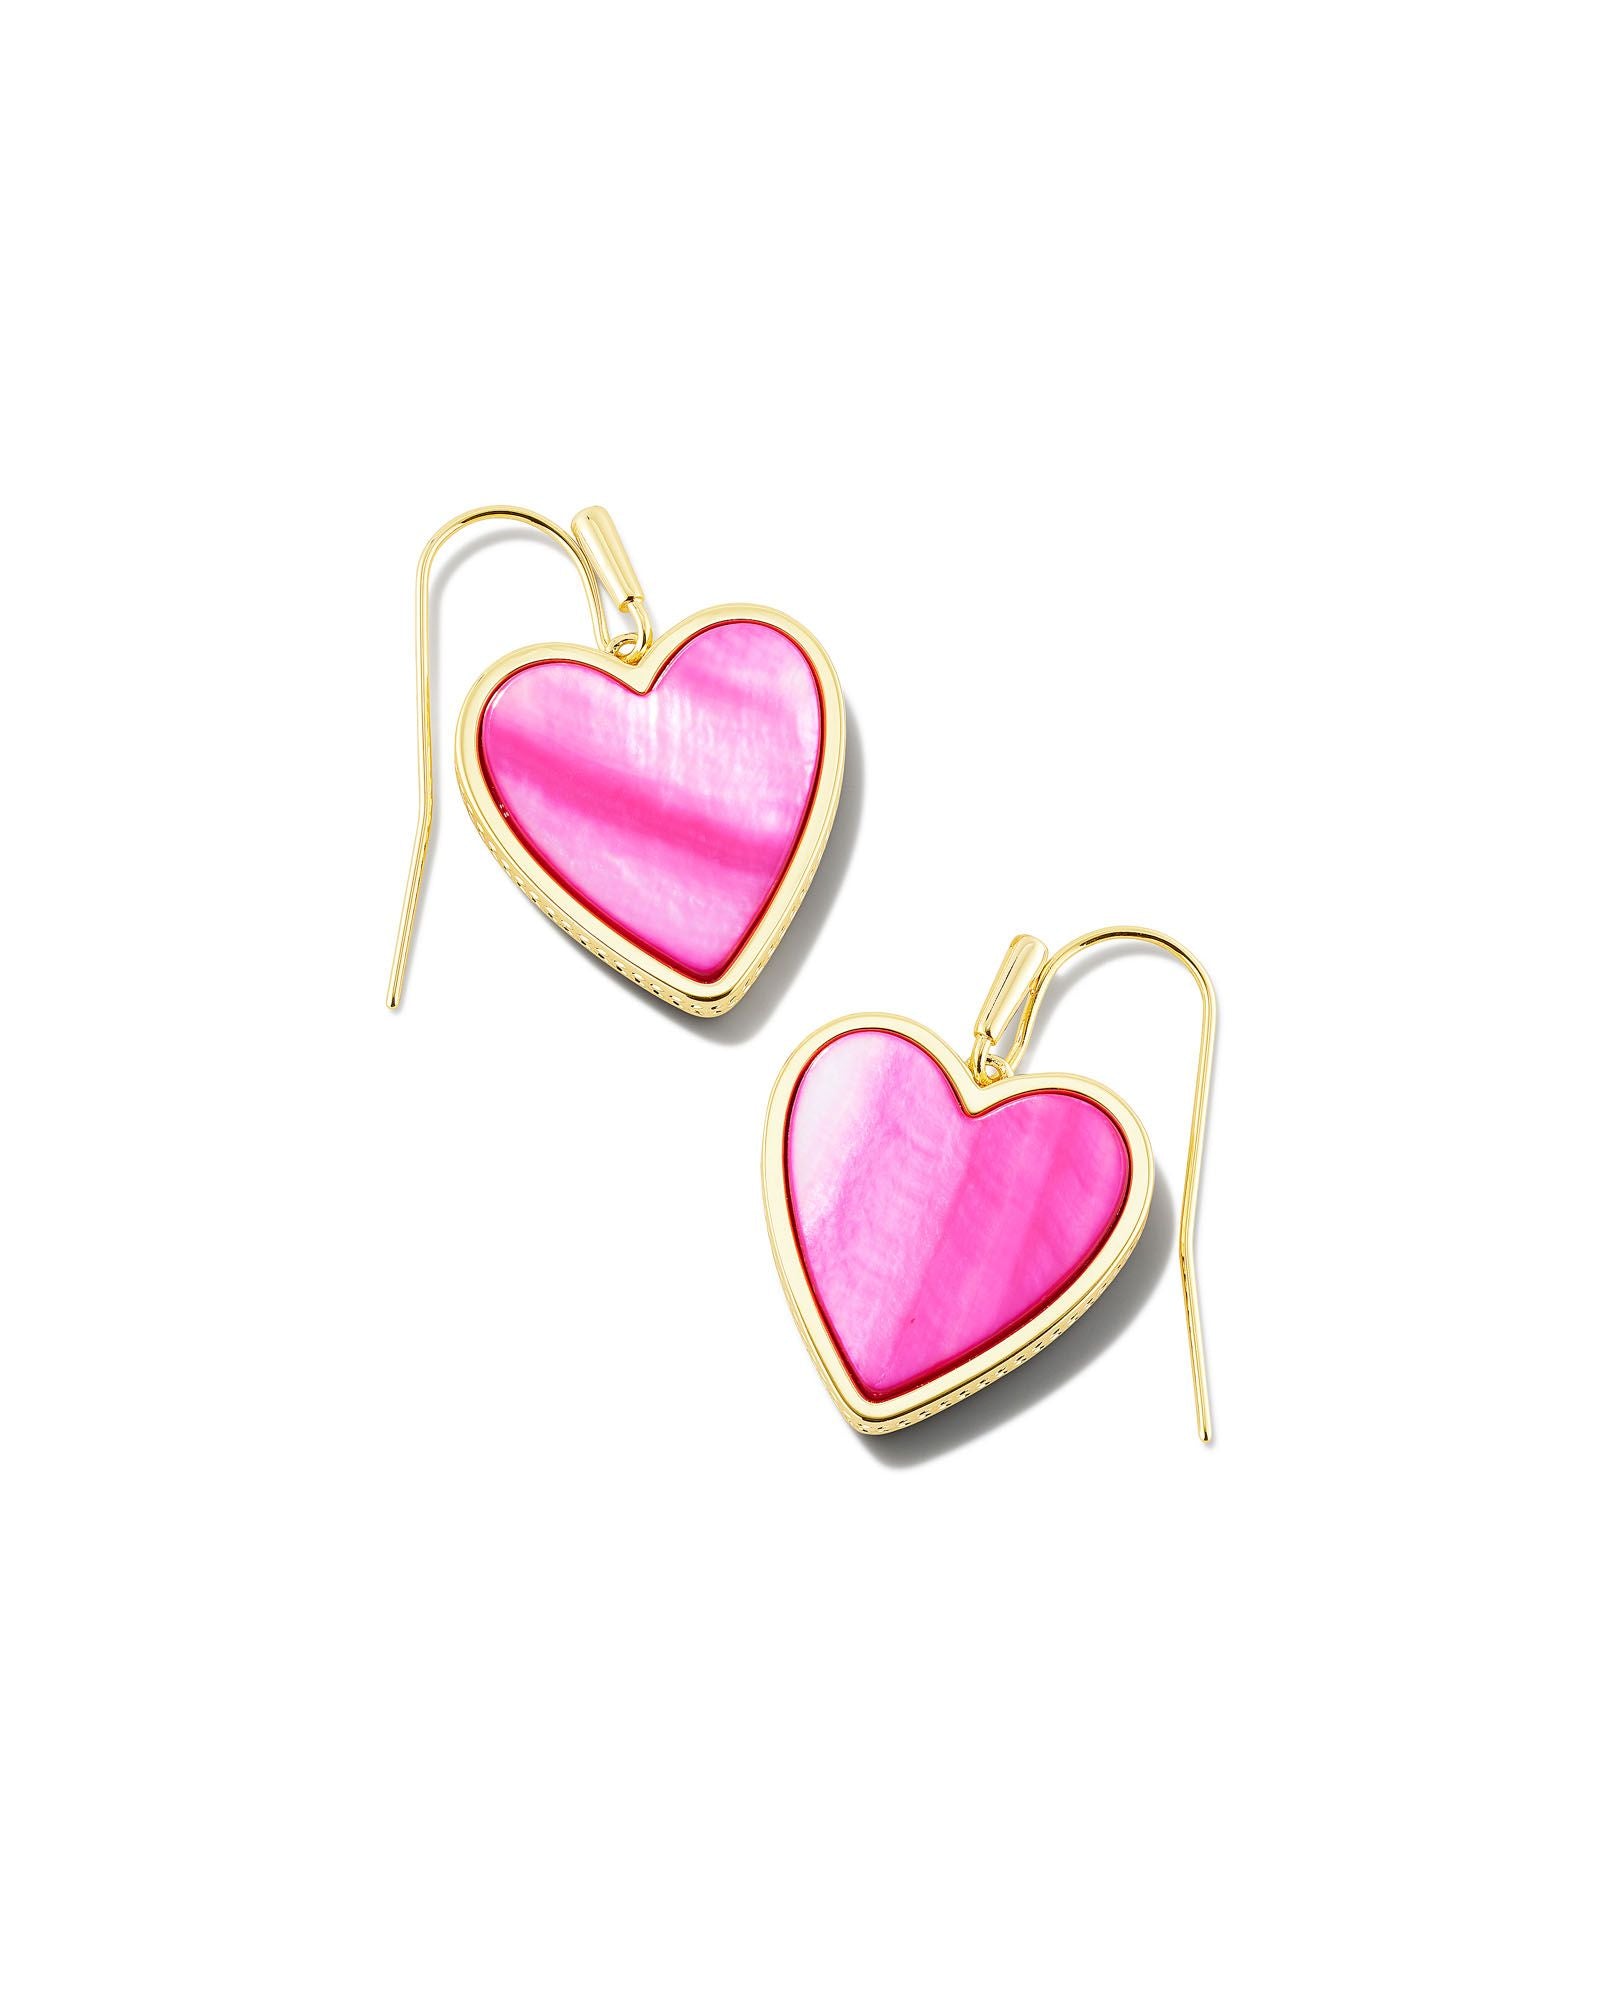 Heart Drop Earrings In Gold Hot Pink Mother Of Pearl - Image 1 - Kendra Scott